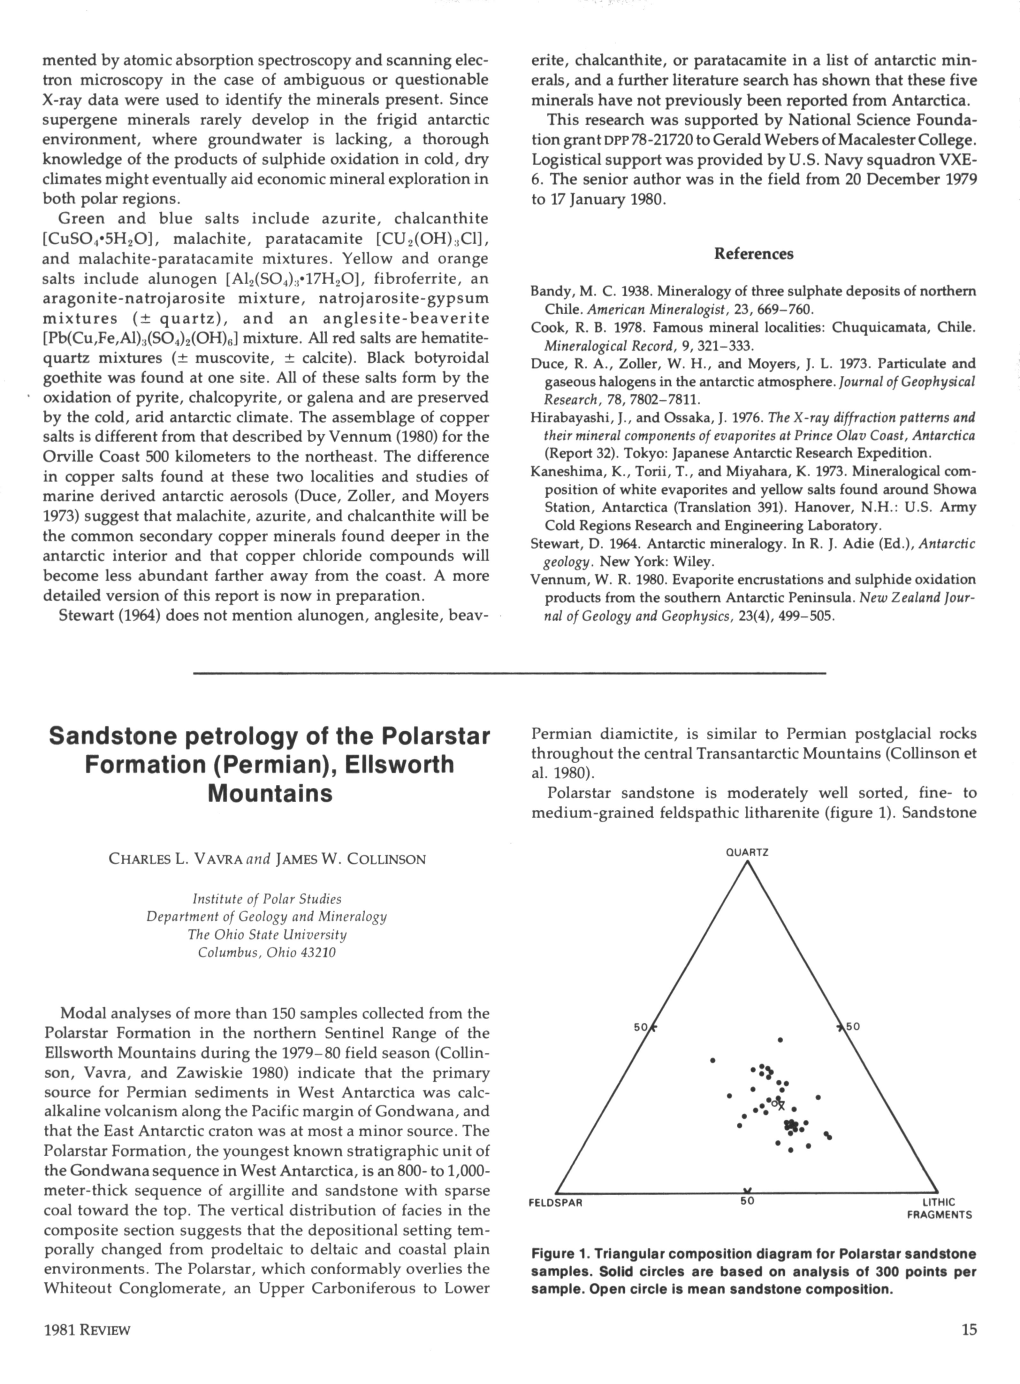 Sandstone Petrology of the Polarstar Formation (Permian), Ellsworth